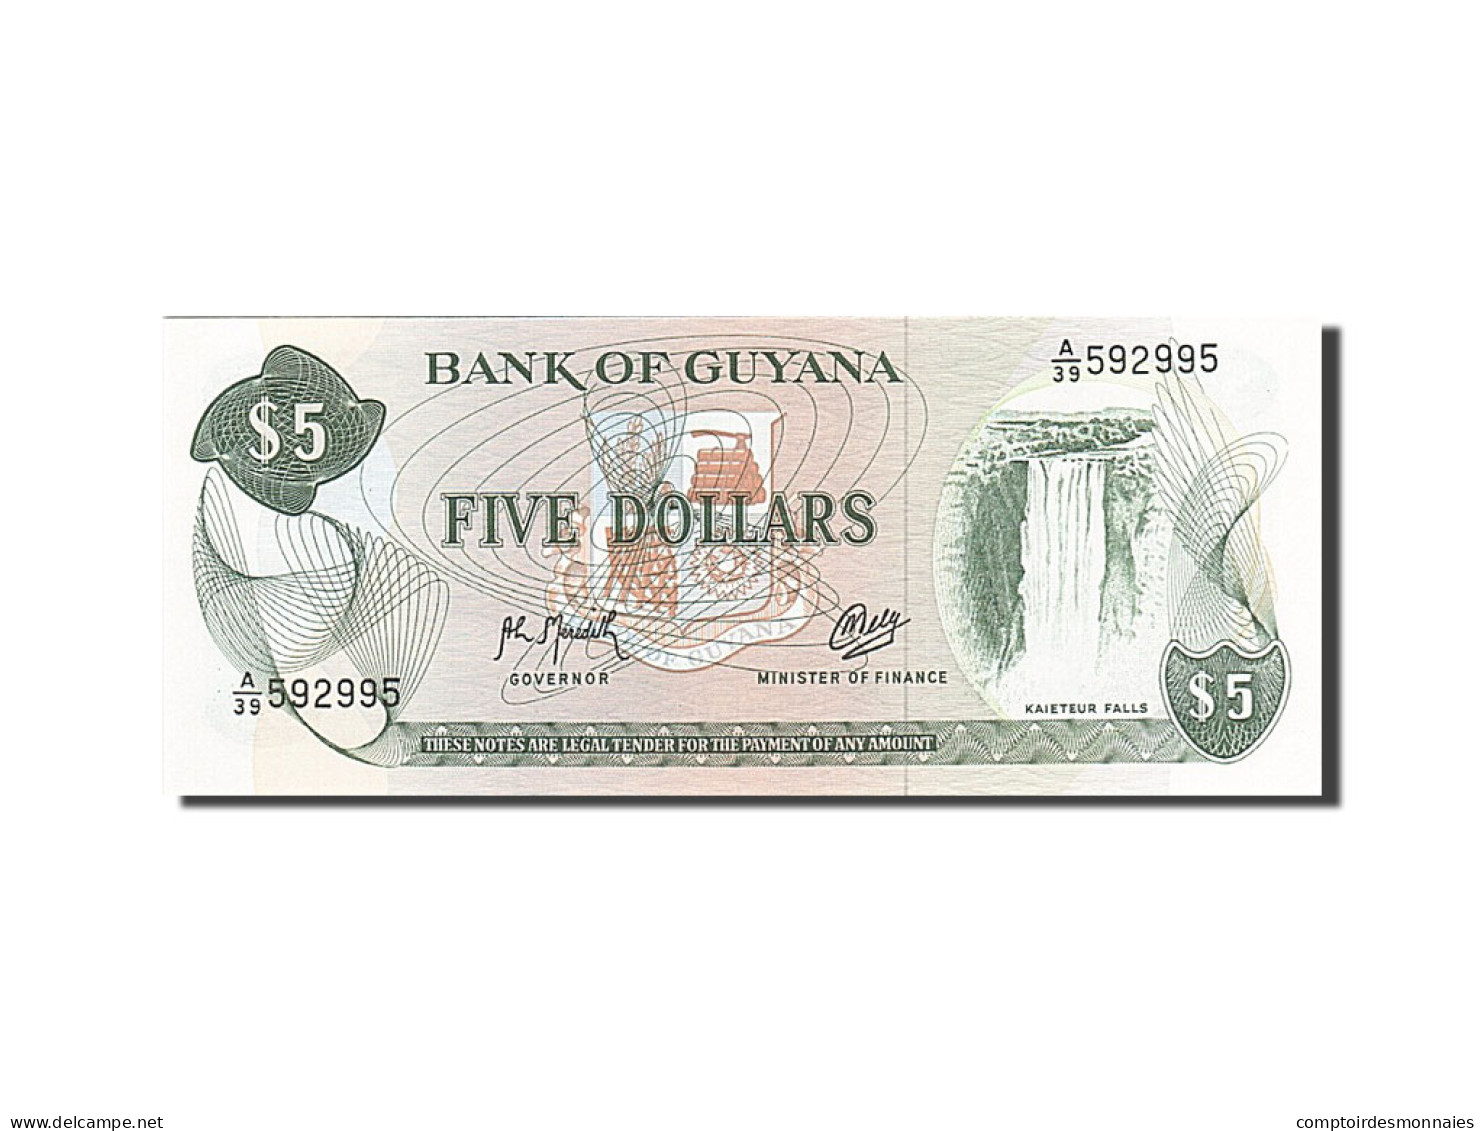 Billet, Guyana, 5 Dollars, 1966, 1992, KM:22f, NEUF - Guyana